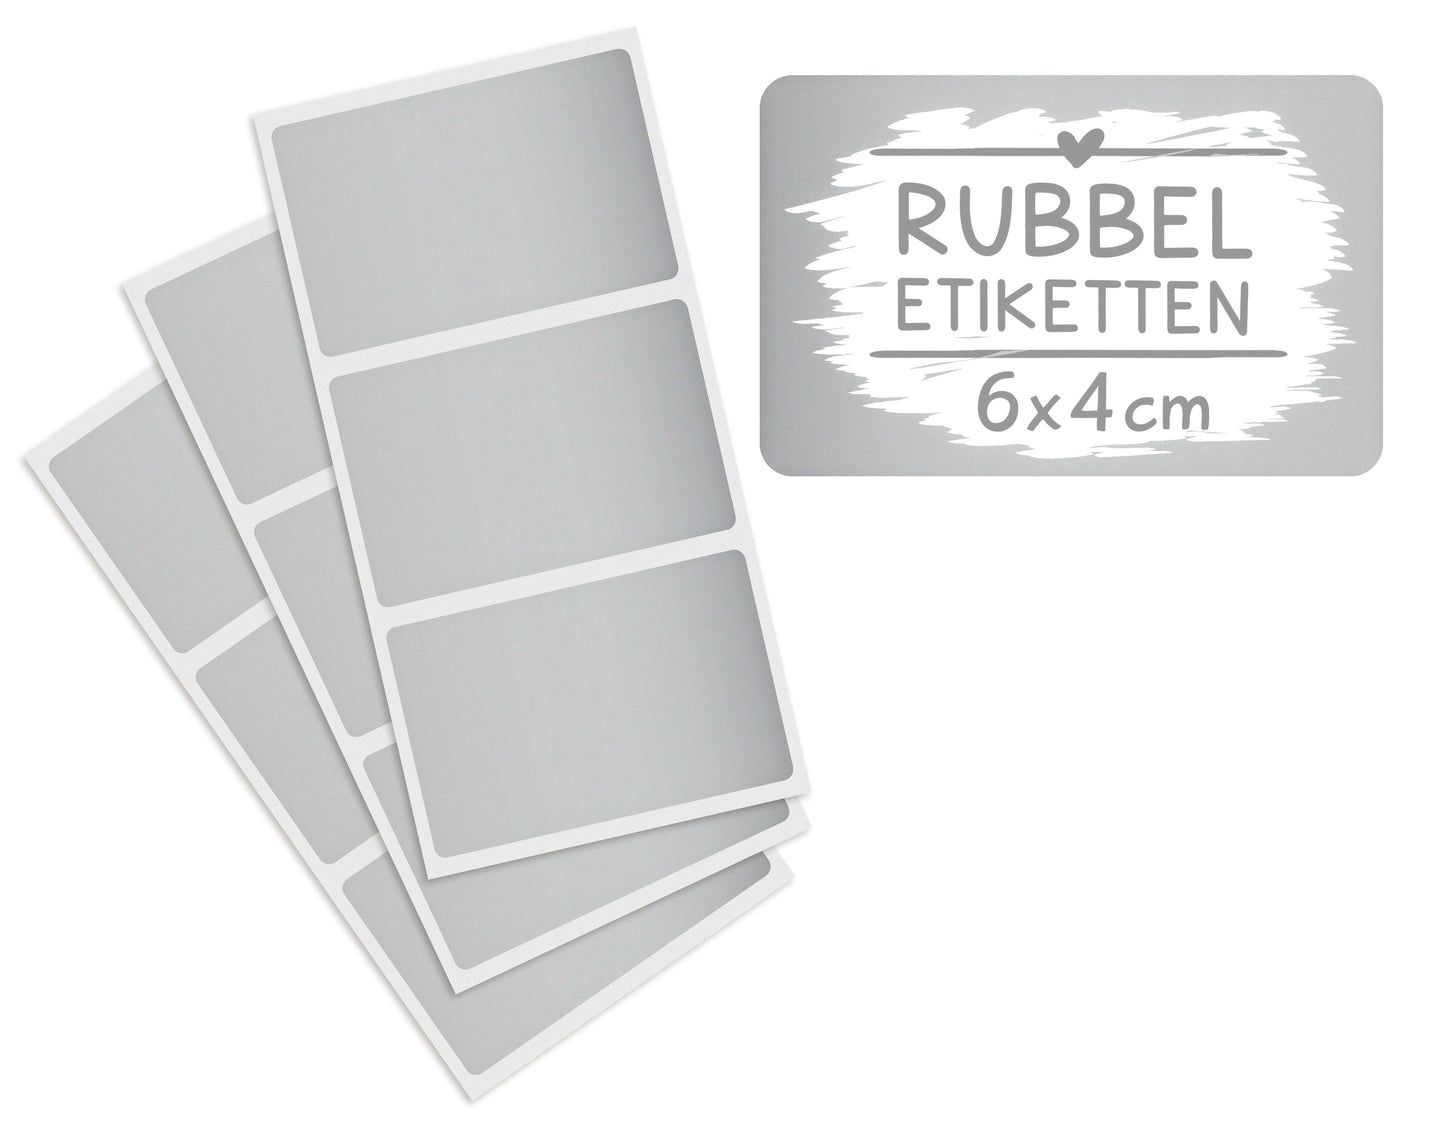 Rubbeletiketten zum Aufkleben silber 6x4 cm Rubbelaufkleber Scratch Off Sticker